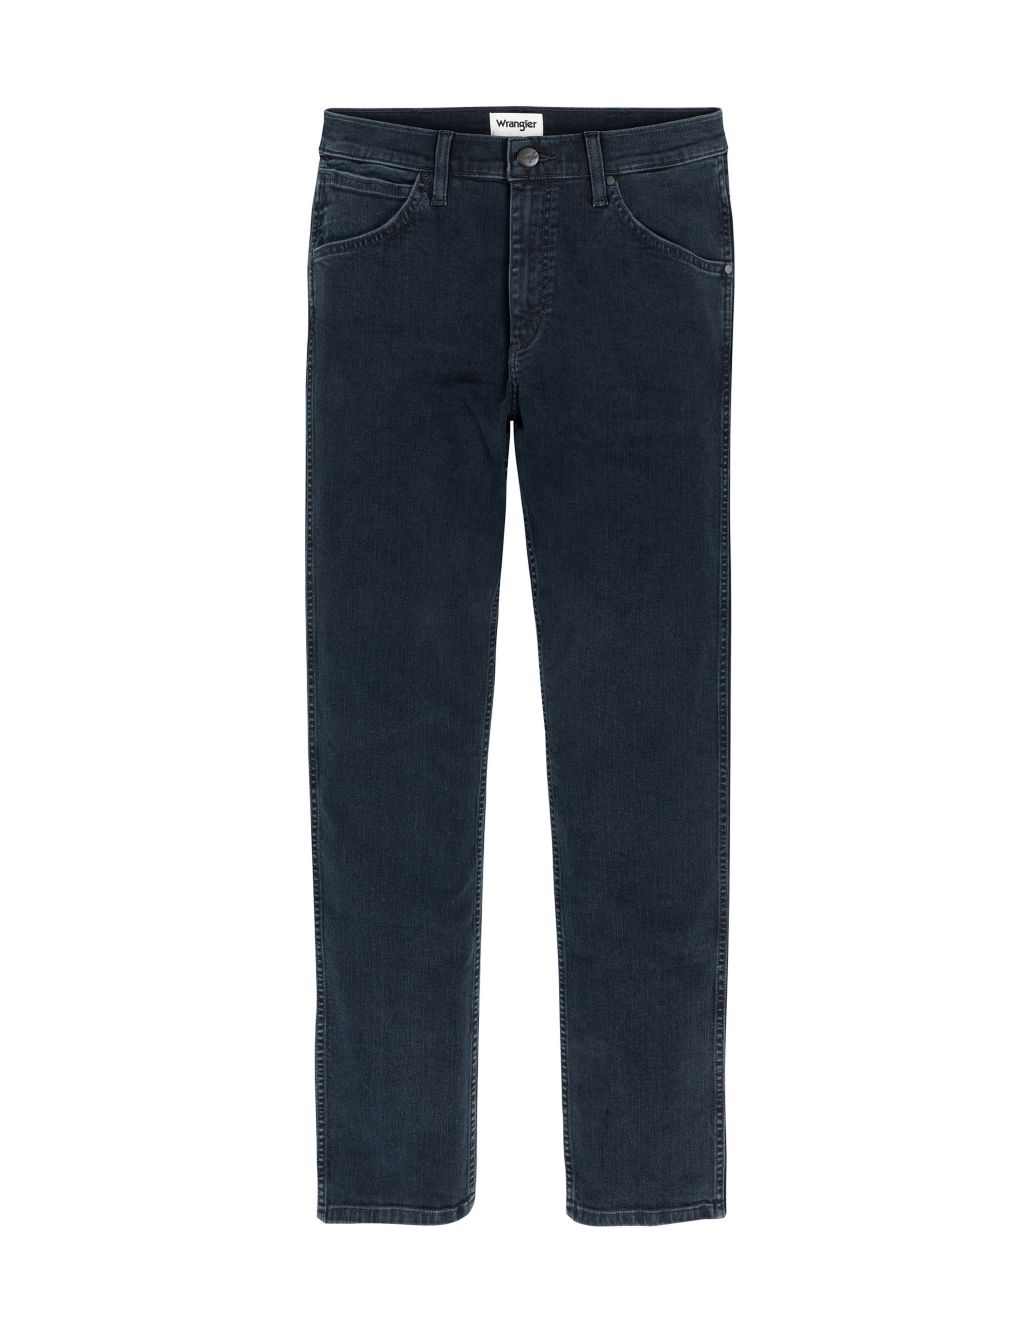 Greensboro Regular Straight Fit Jeans image 2